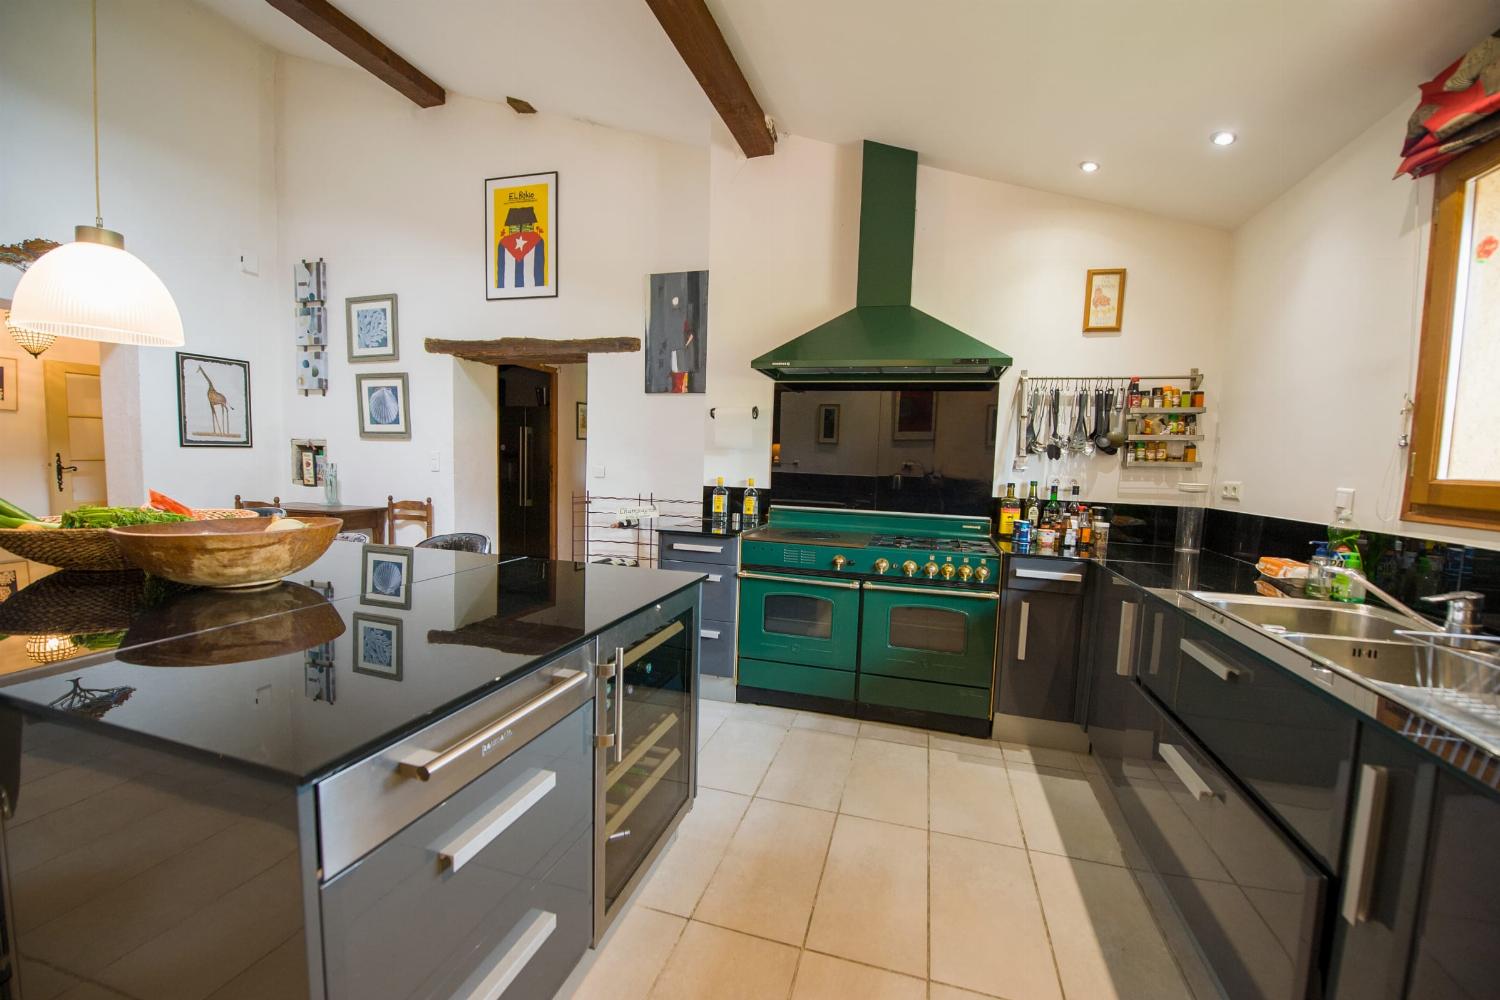 Kitchen | Rental home in Haute-Garonne